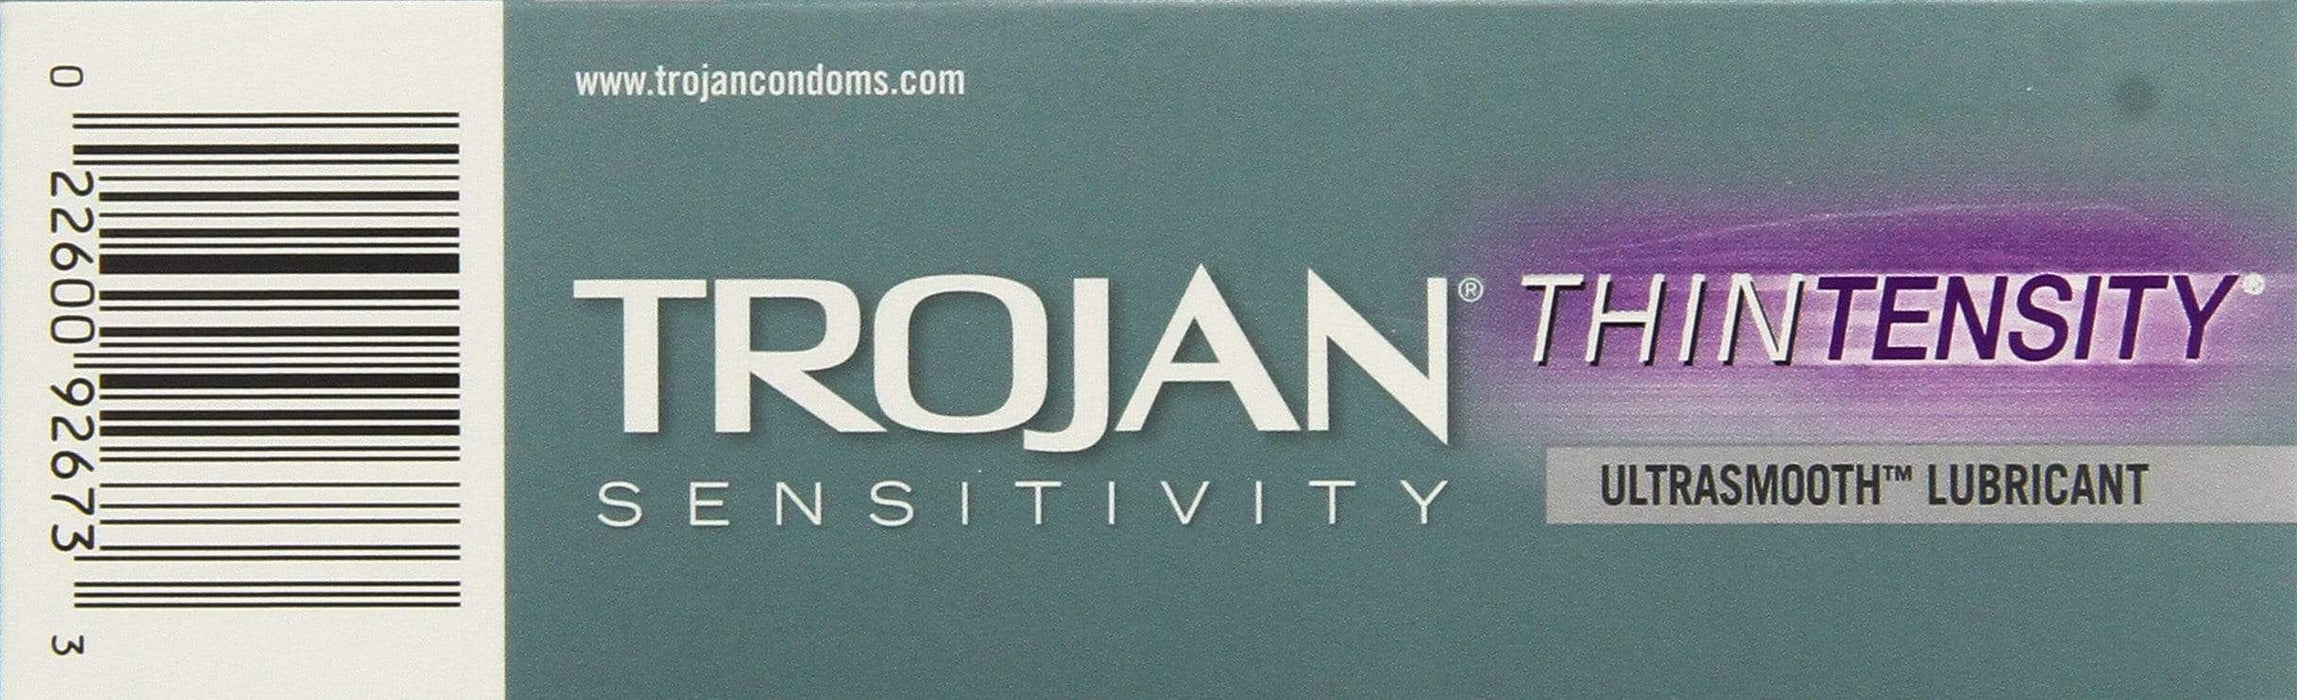 Trojan Sensitivity Thintensity,12-count Condom Trojan 